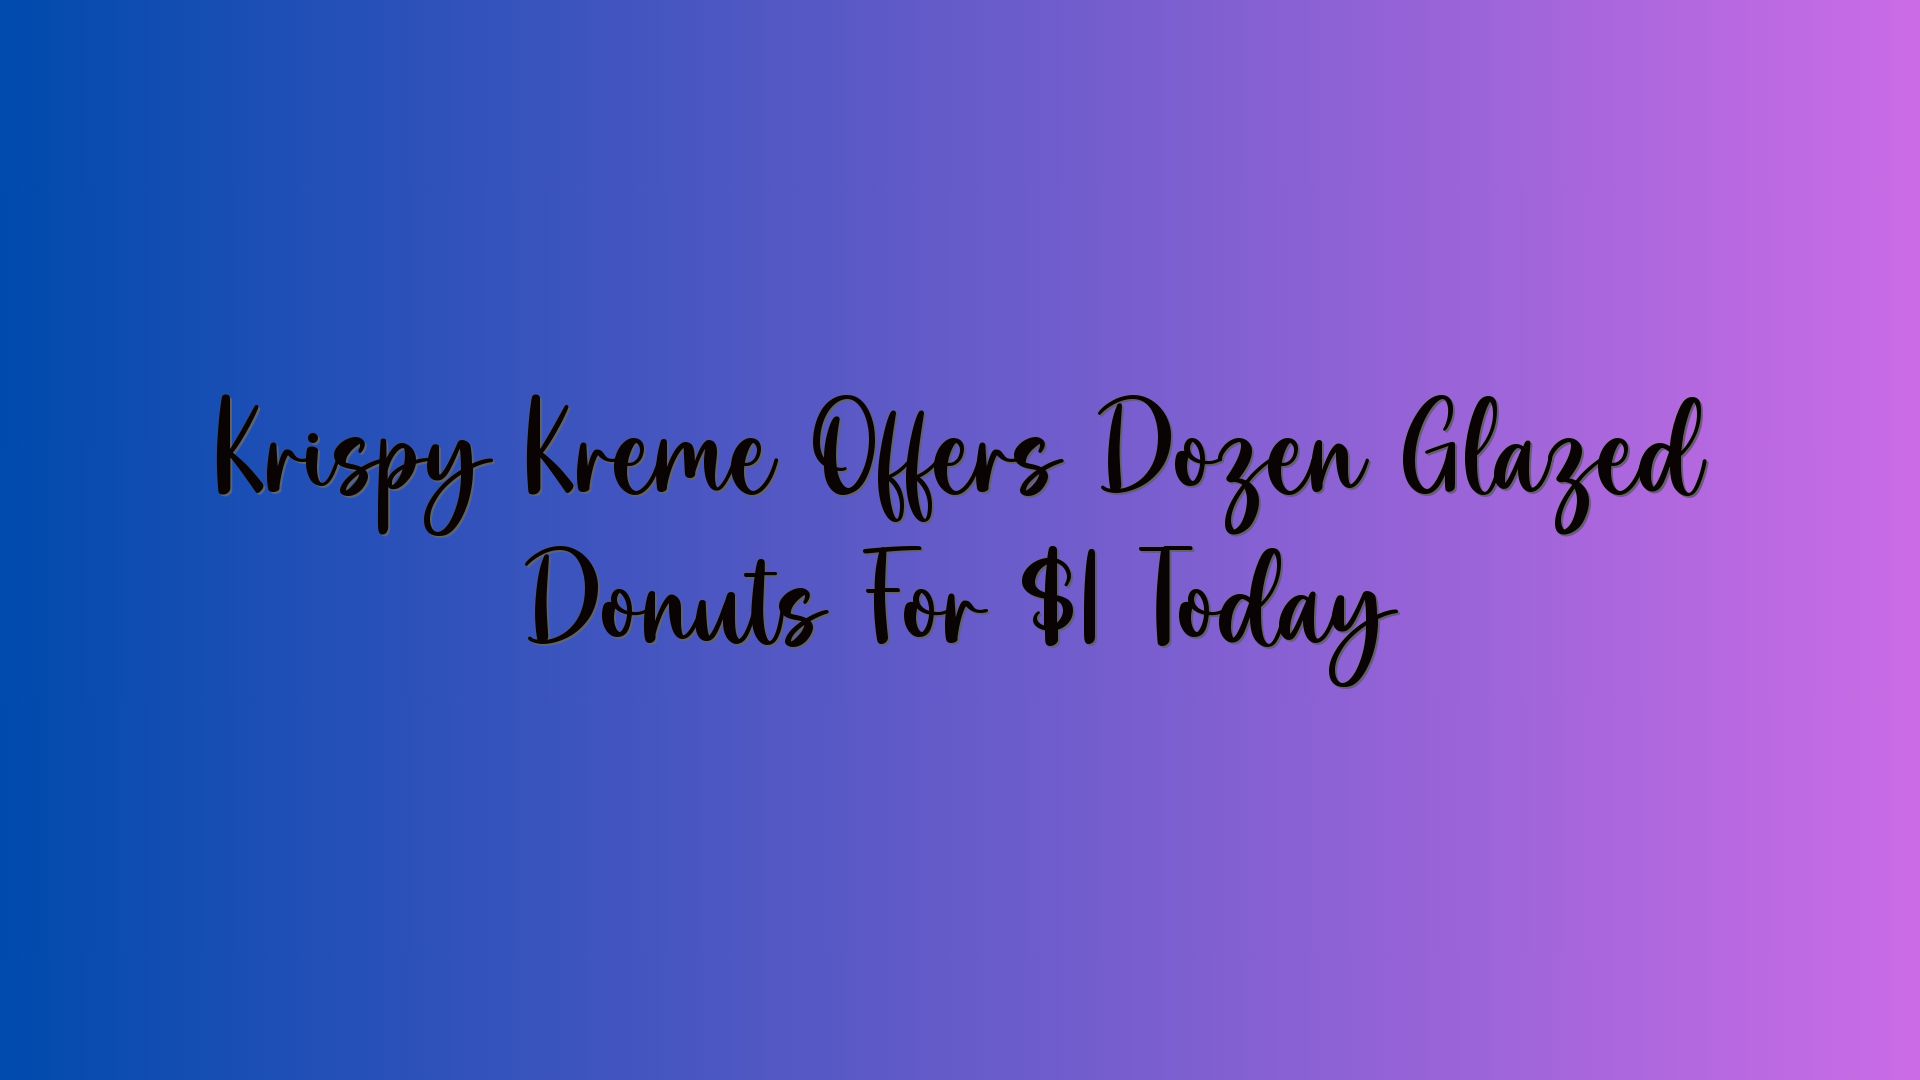 Krispy Kreme Offers Dozen Glazed Donuts For $1 Today